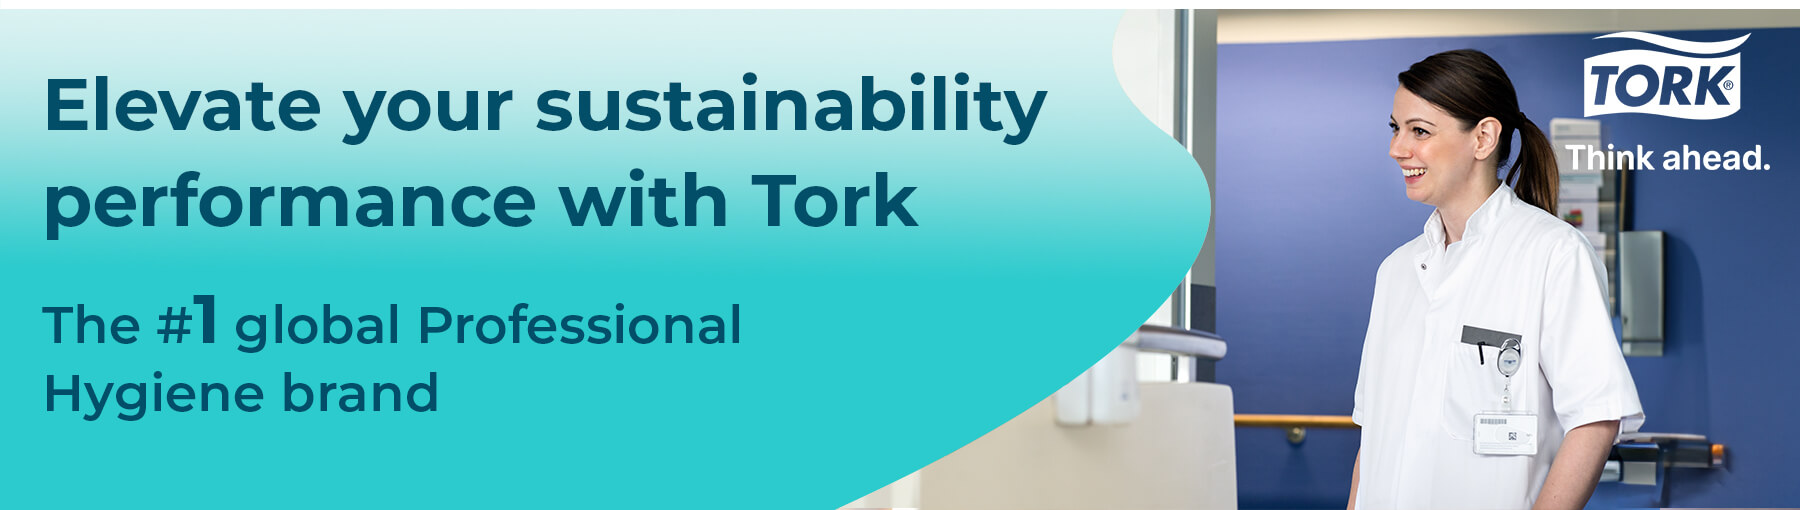 Tork_Sustainability_Main_Banner_.jpg